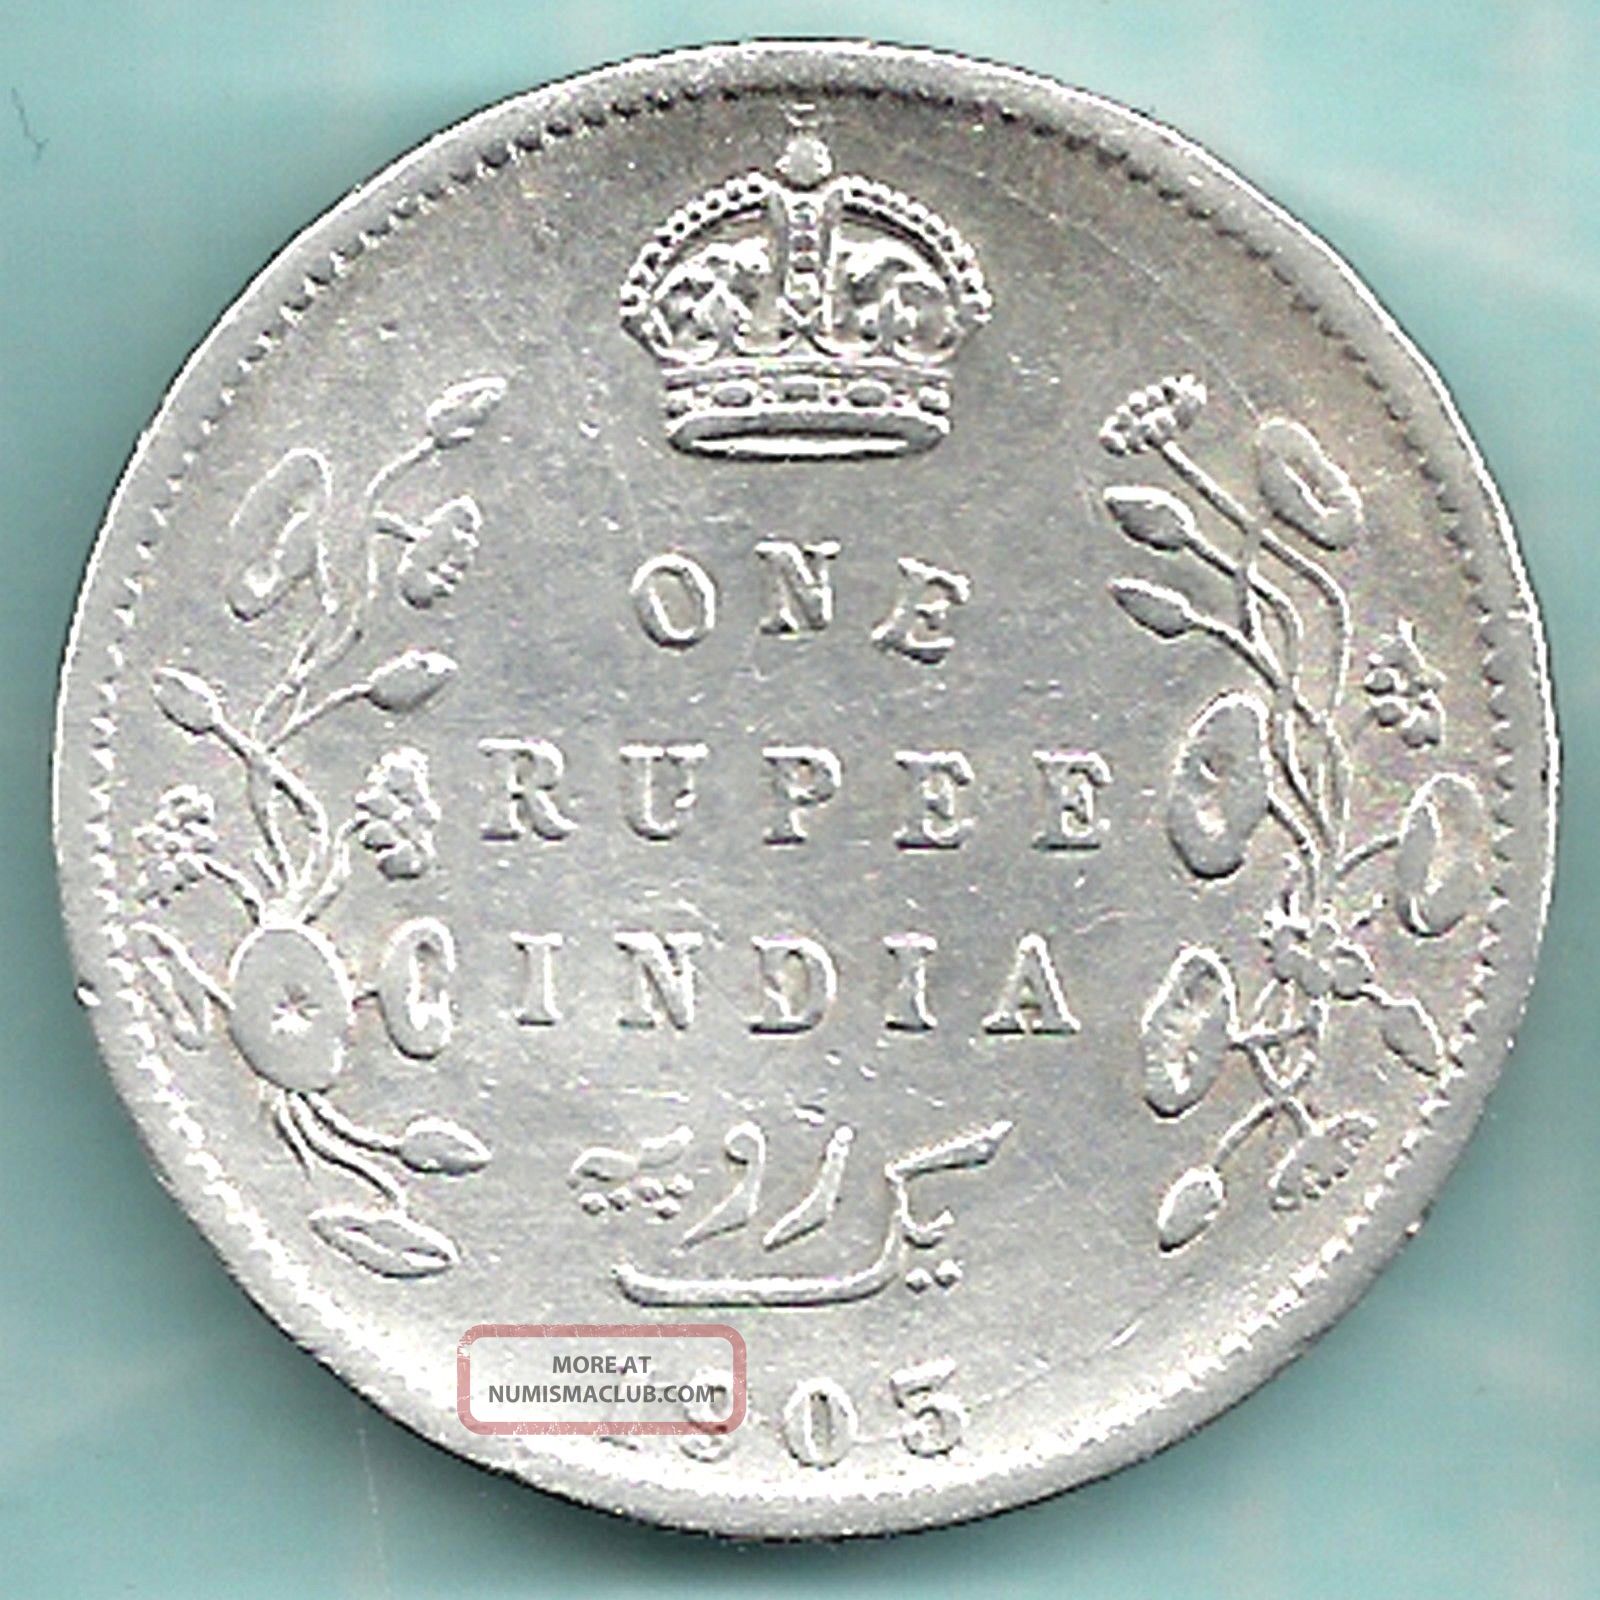 British India - 1903 - King Edward Vii - One Rupee - Rare Variety Silver Coin India photo